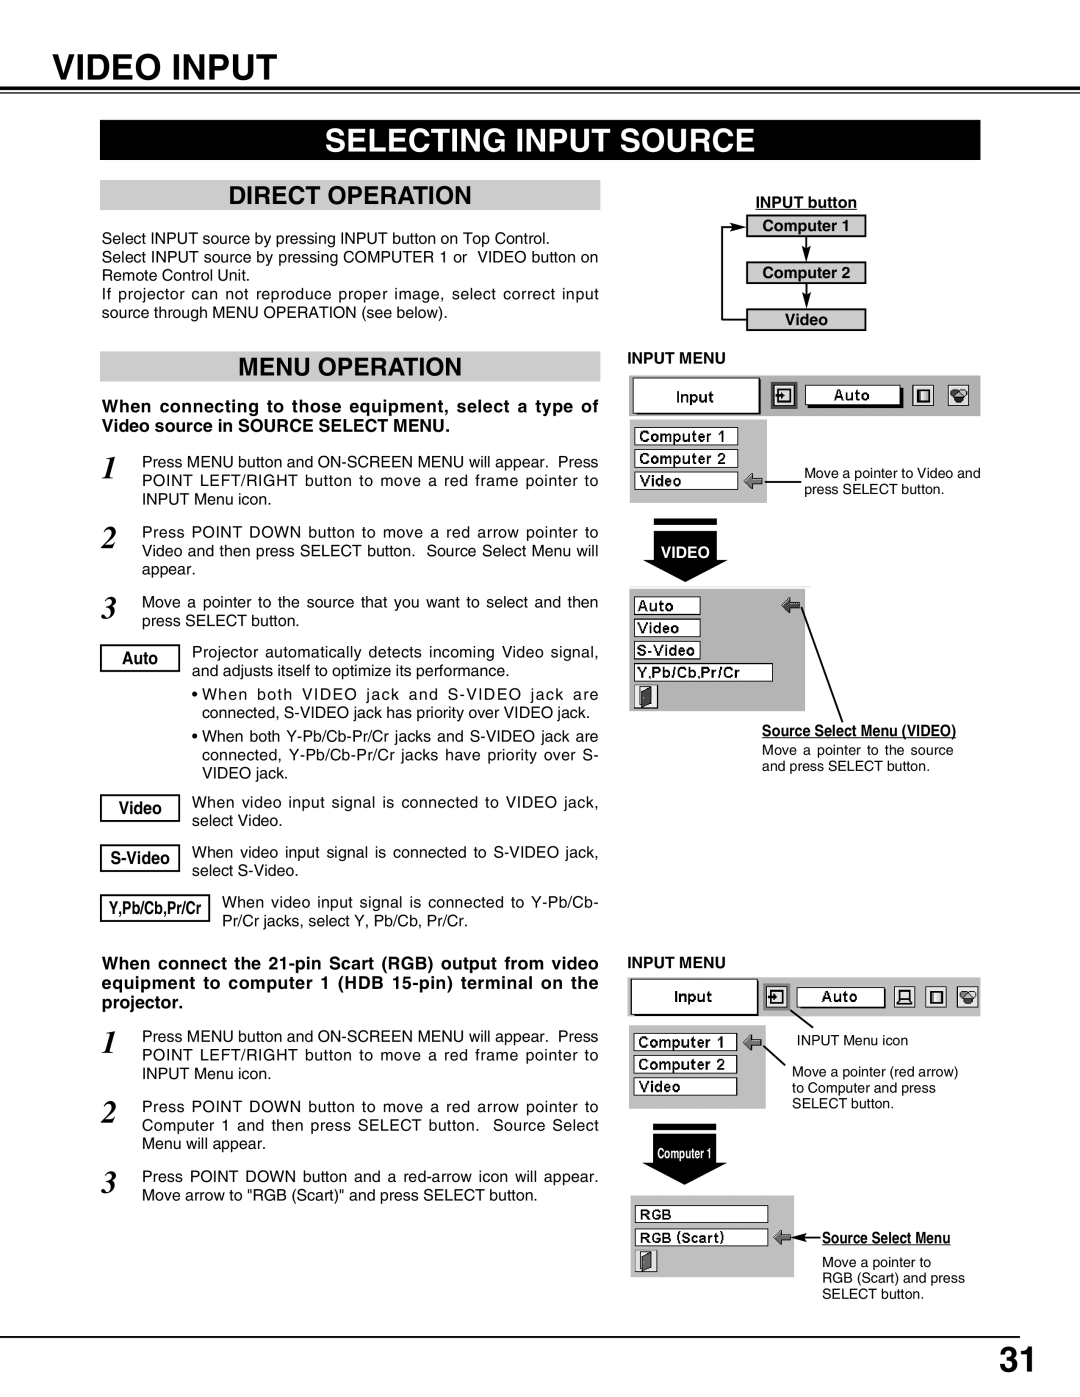 Christie Digital Systems 38-VIV207-01 Video Input, Selecting Input Source, Direct Operation, Menu Operation, Auto, S-Video 